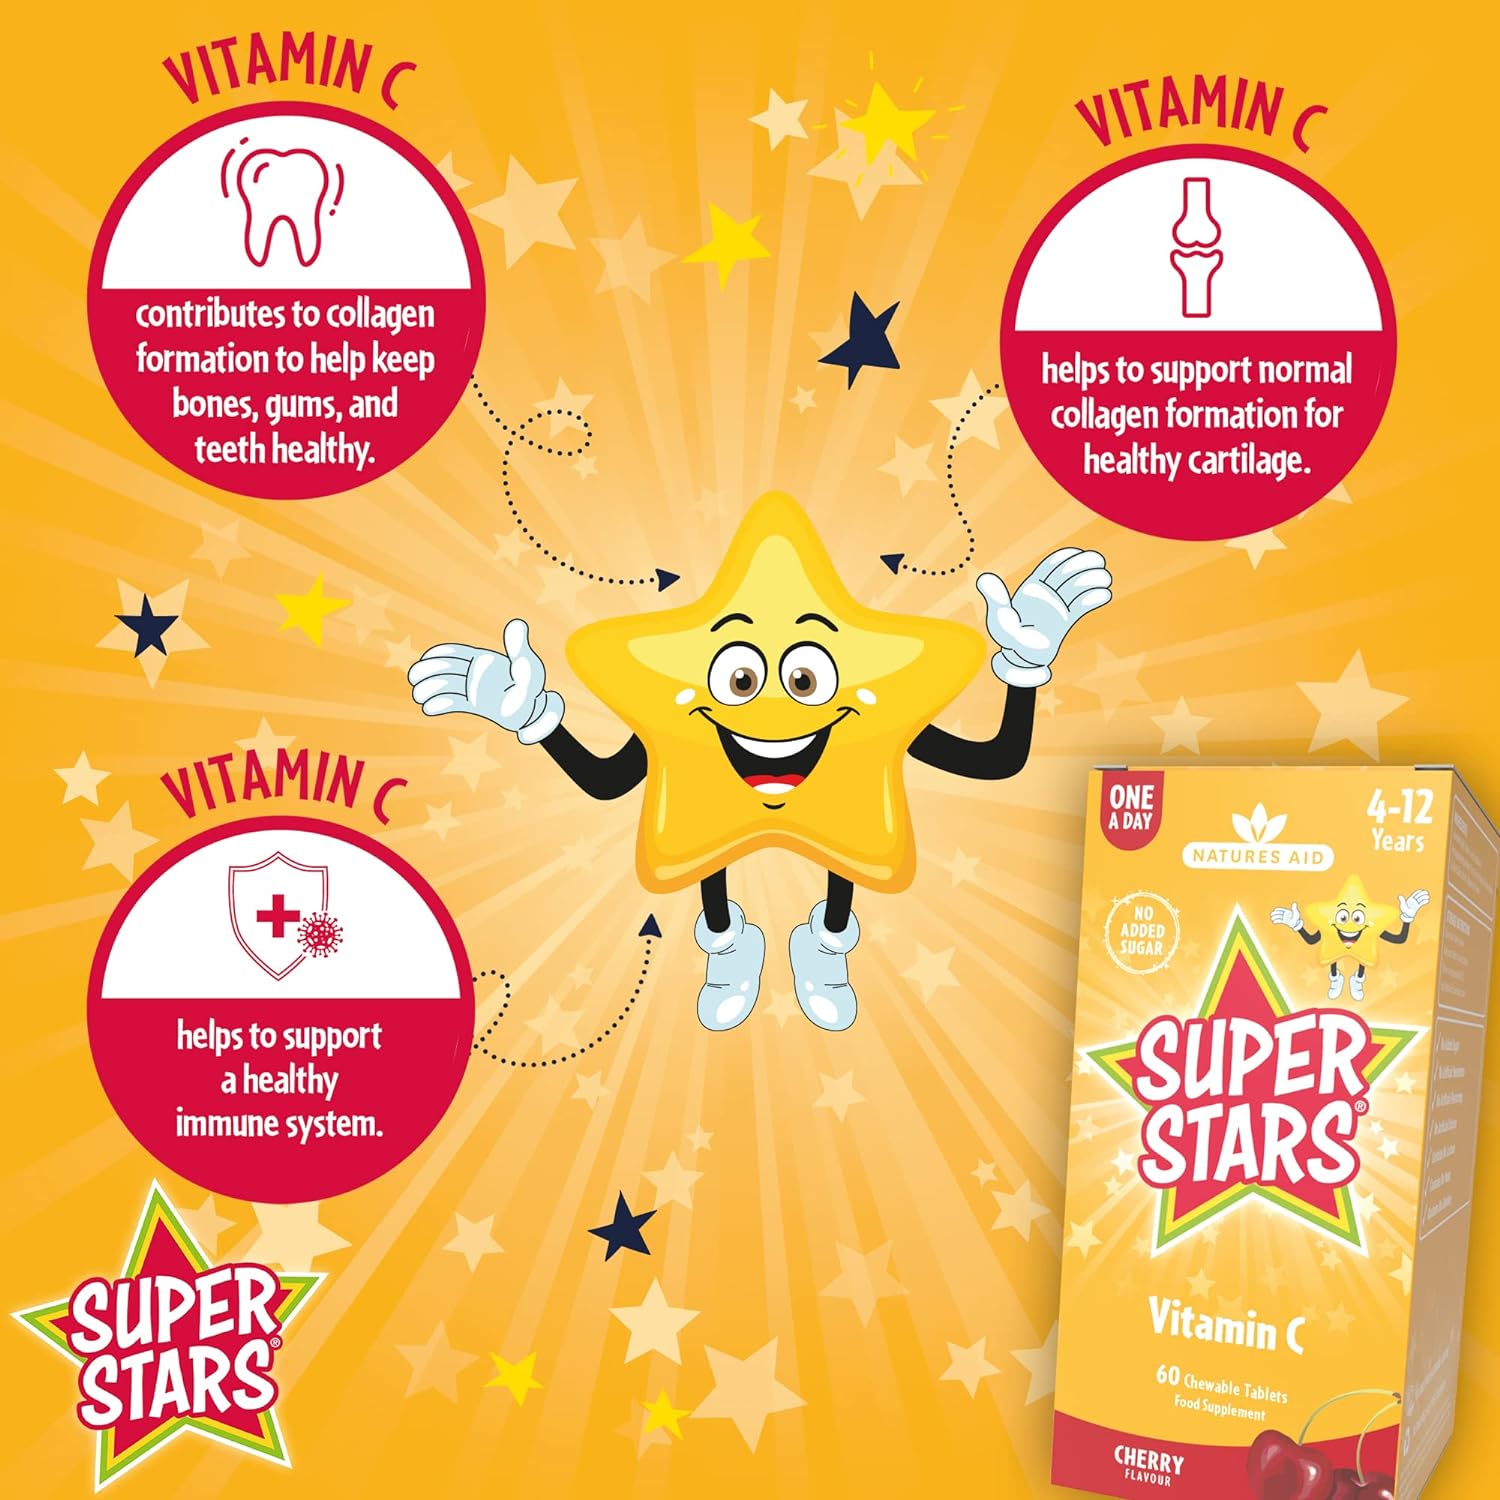 Super Stars Vitamin C 60 Chewable Tablets